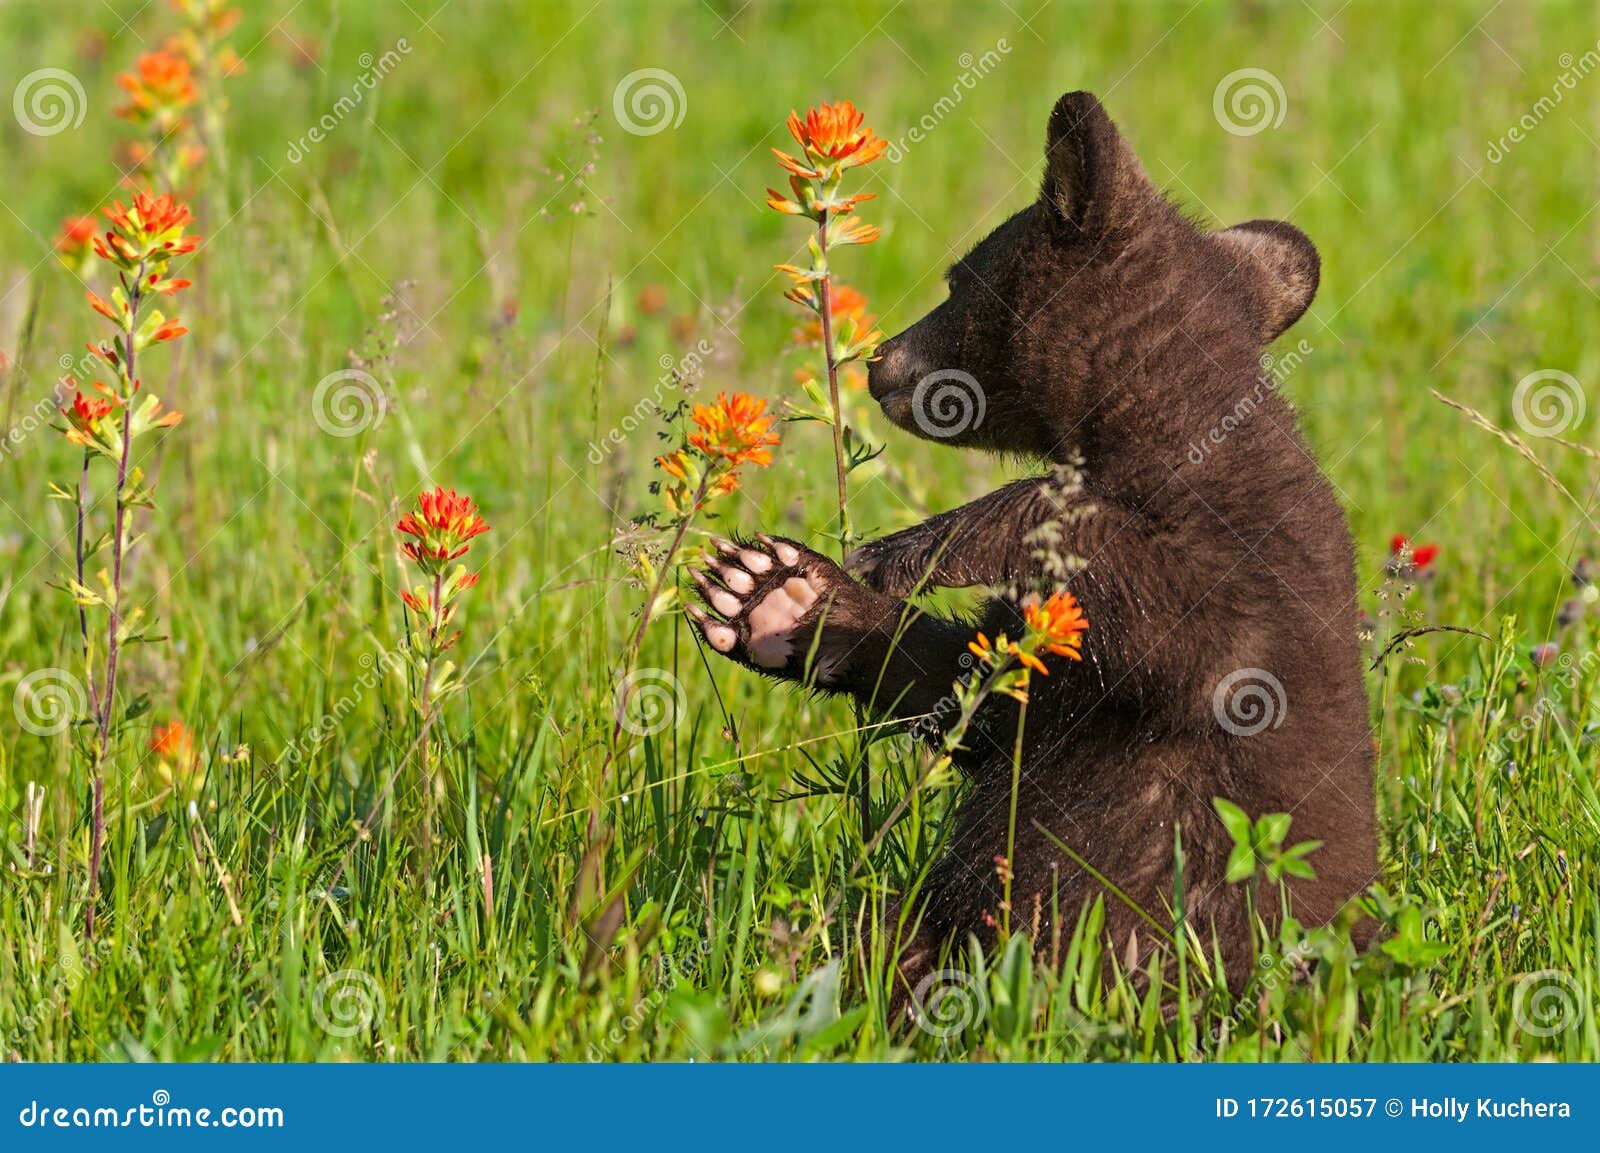 black bear cub ursus americanus turns back to sniff prairie fire flower summer